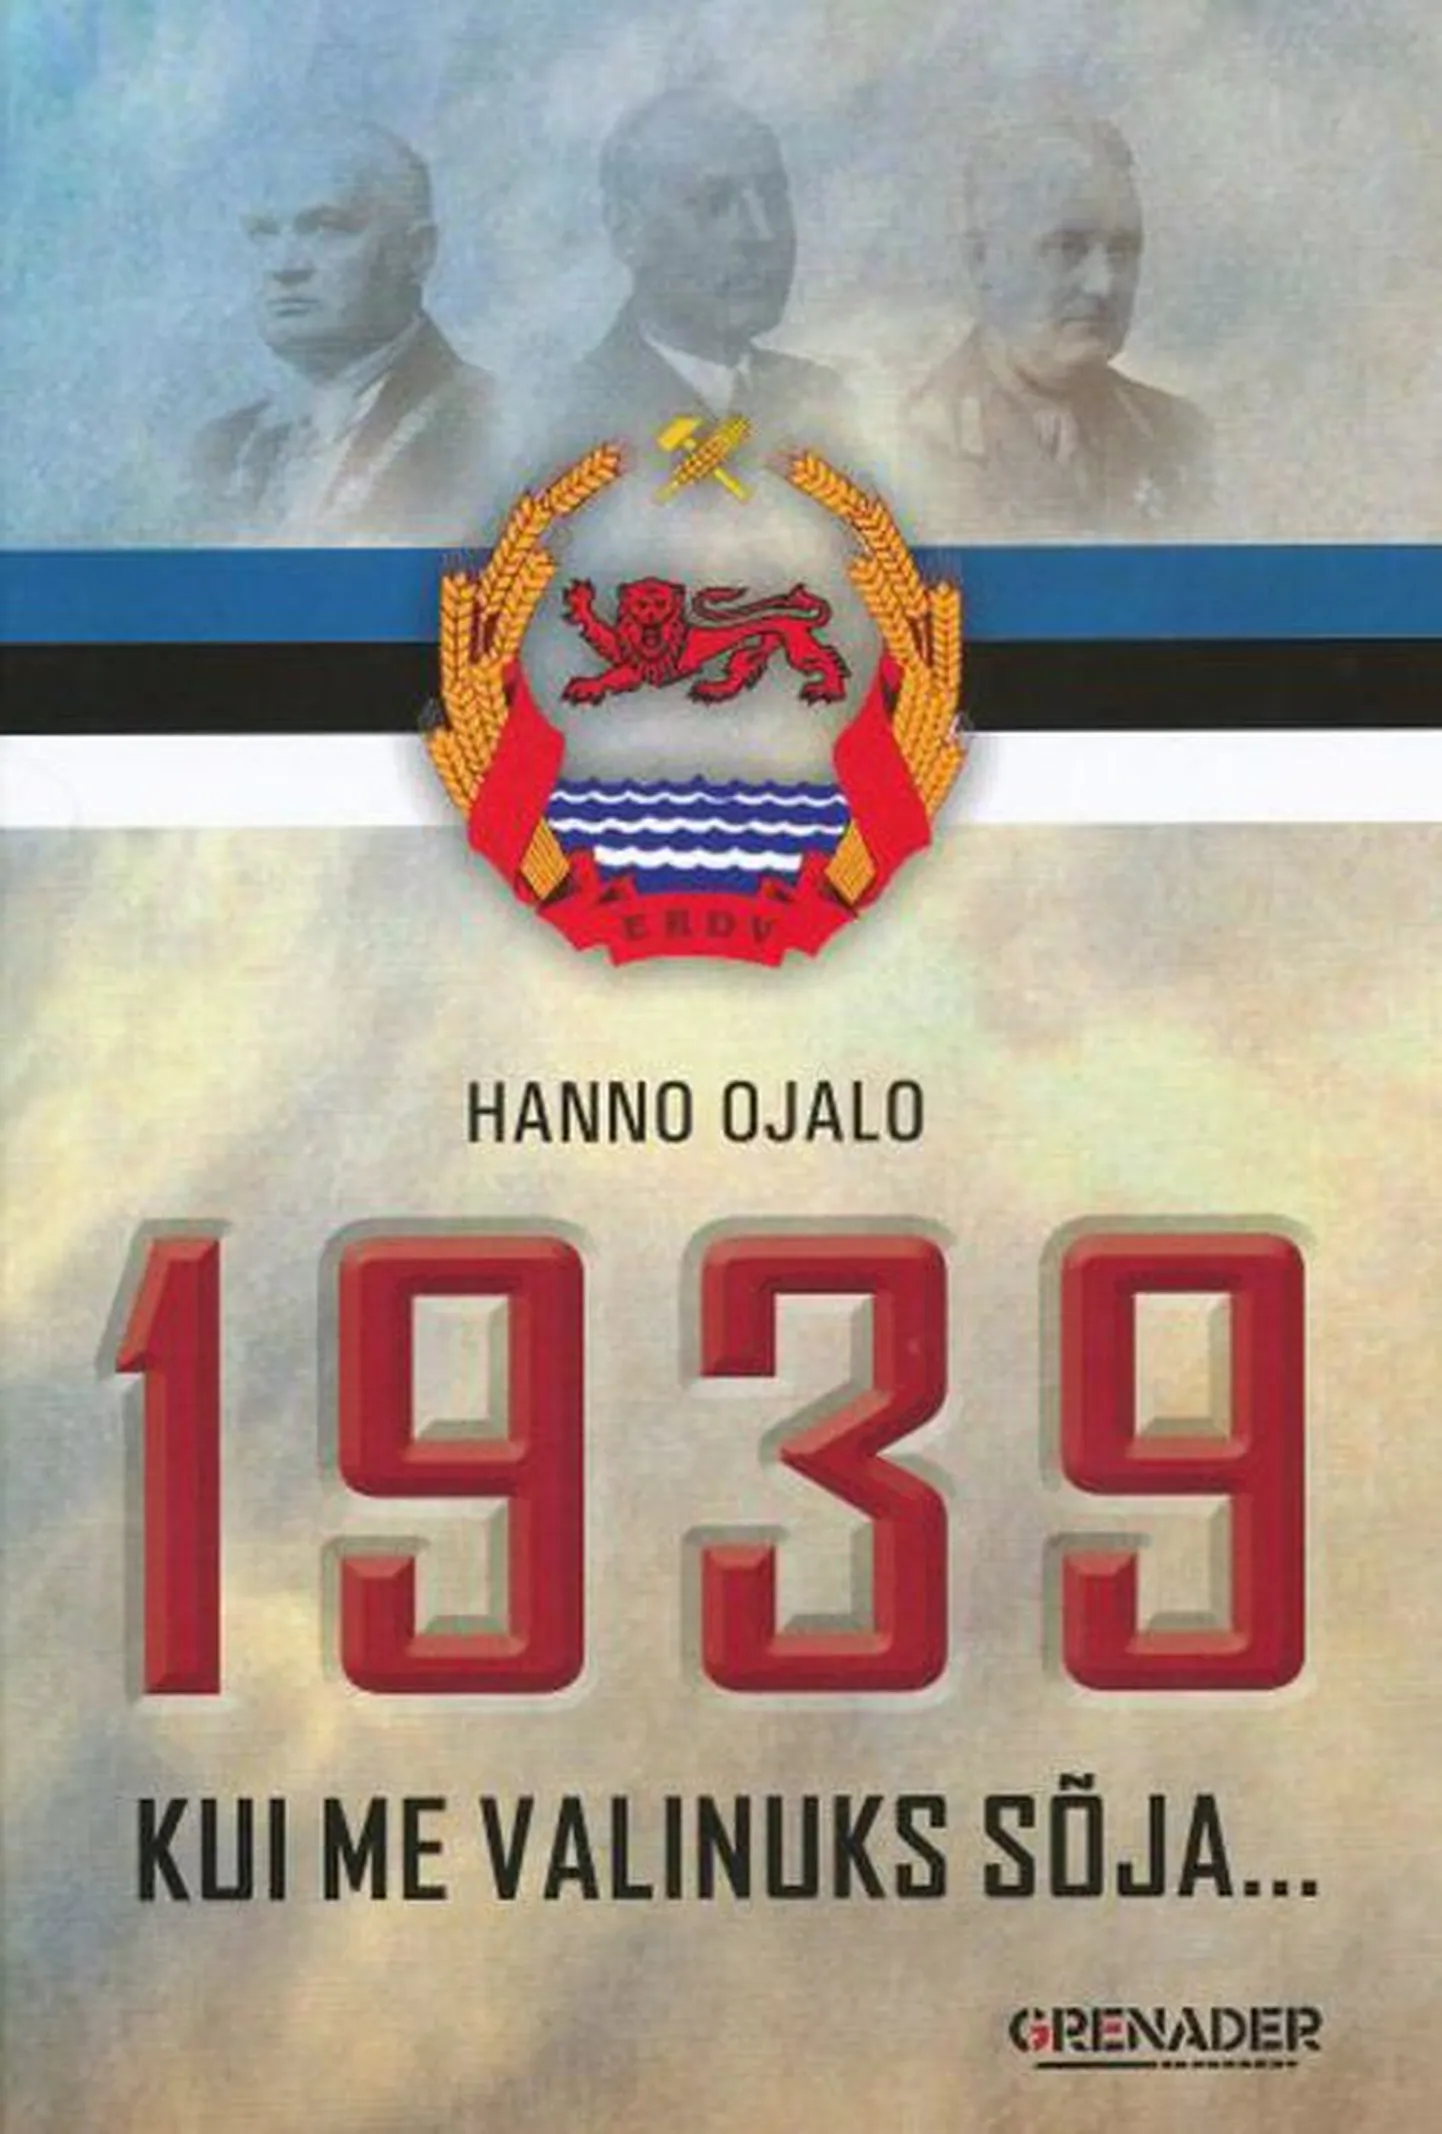 Обложка книги Ханно Ояло «1939: Kui me valinuks sõja...». Издательство Grenader, 2010.